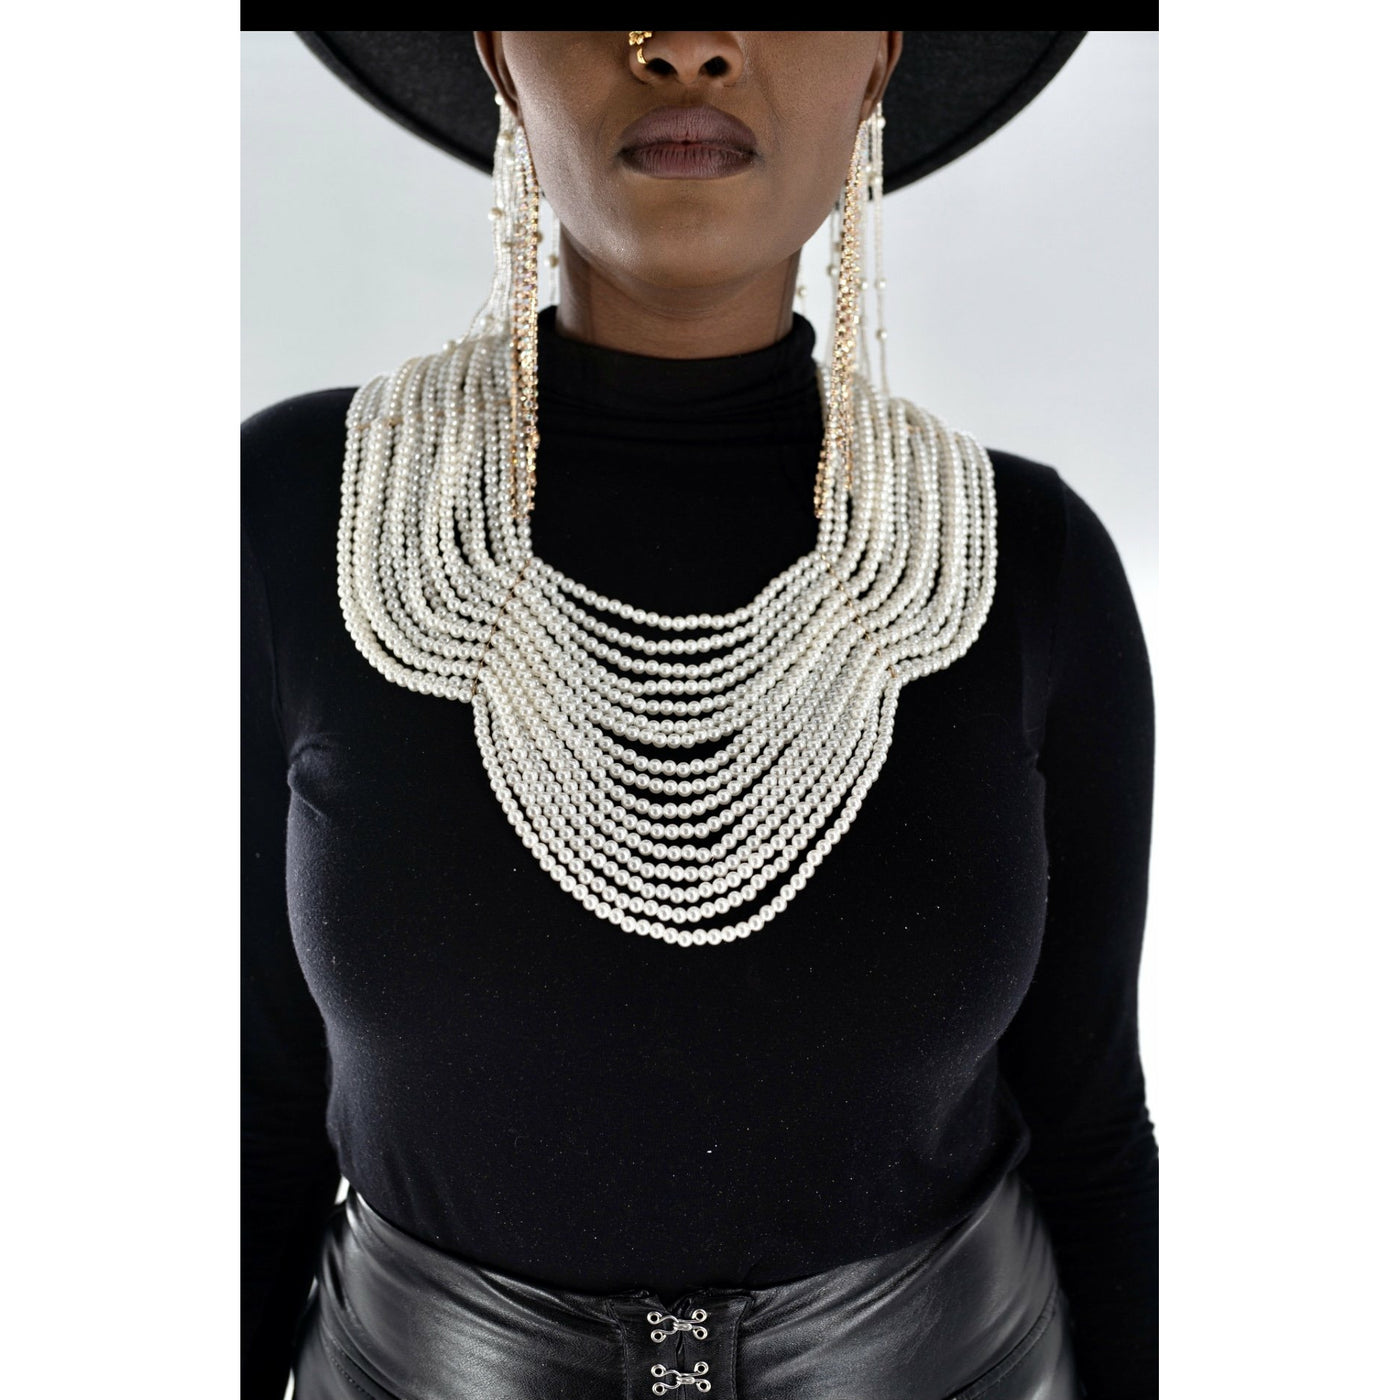 The countess Sifa multi-strand pearl bib necklace